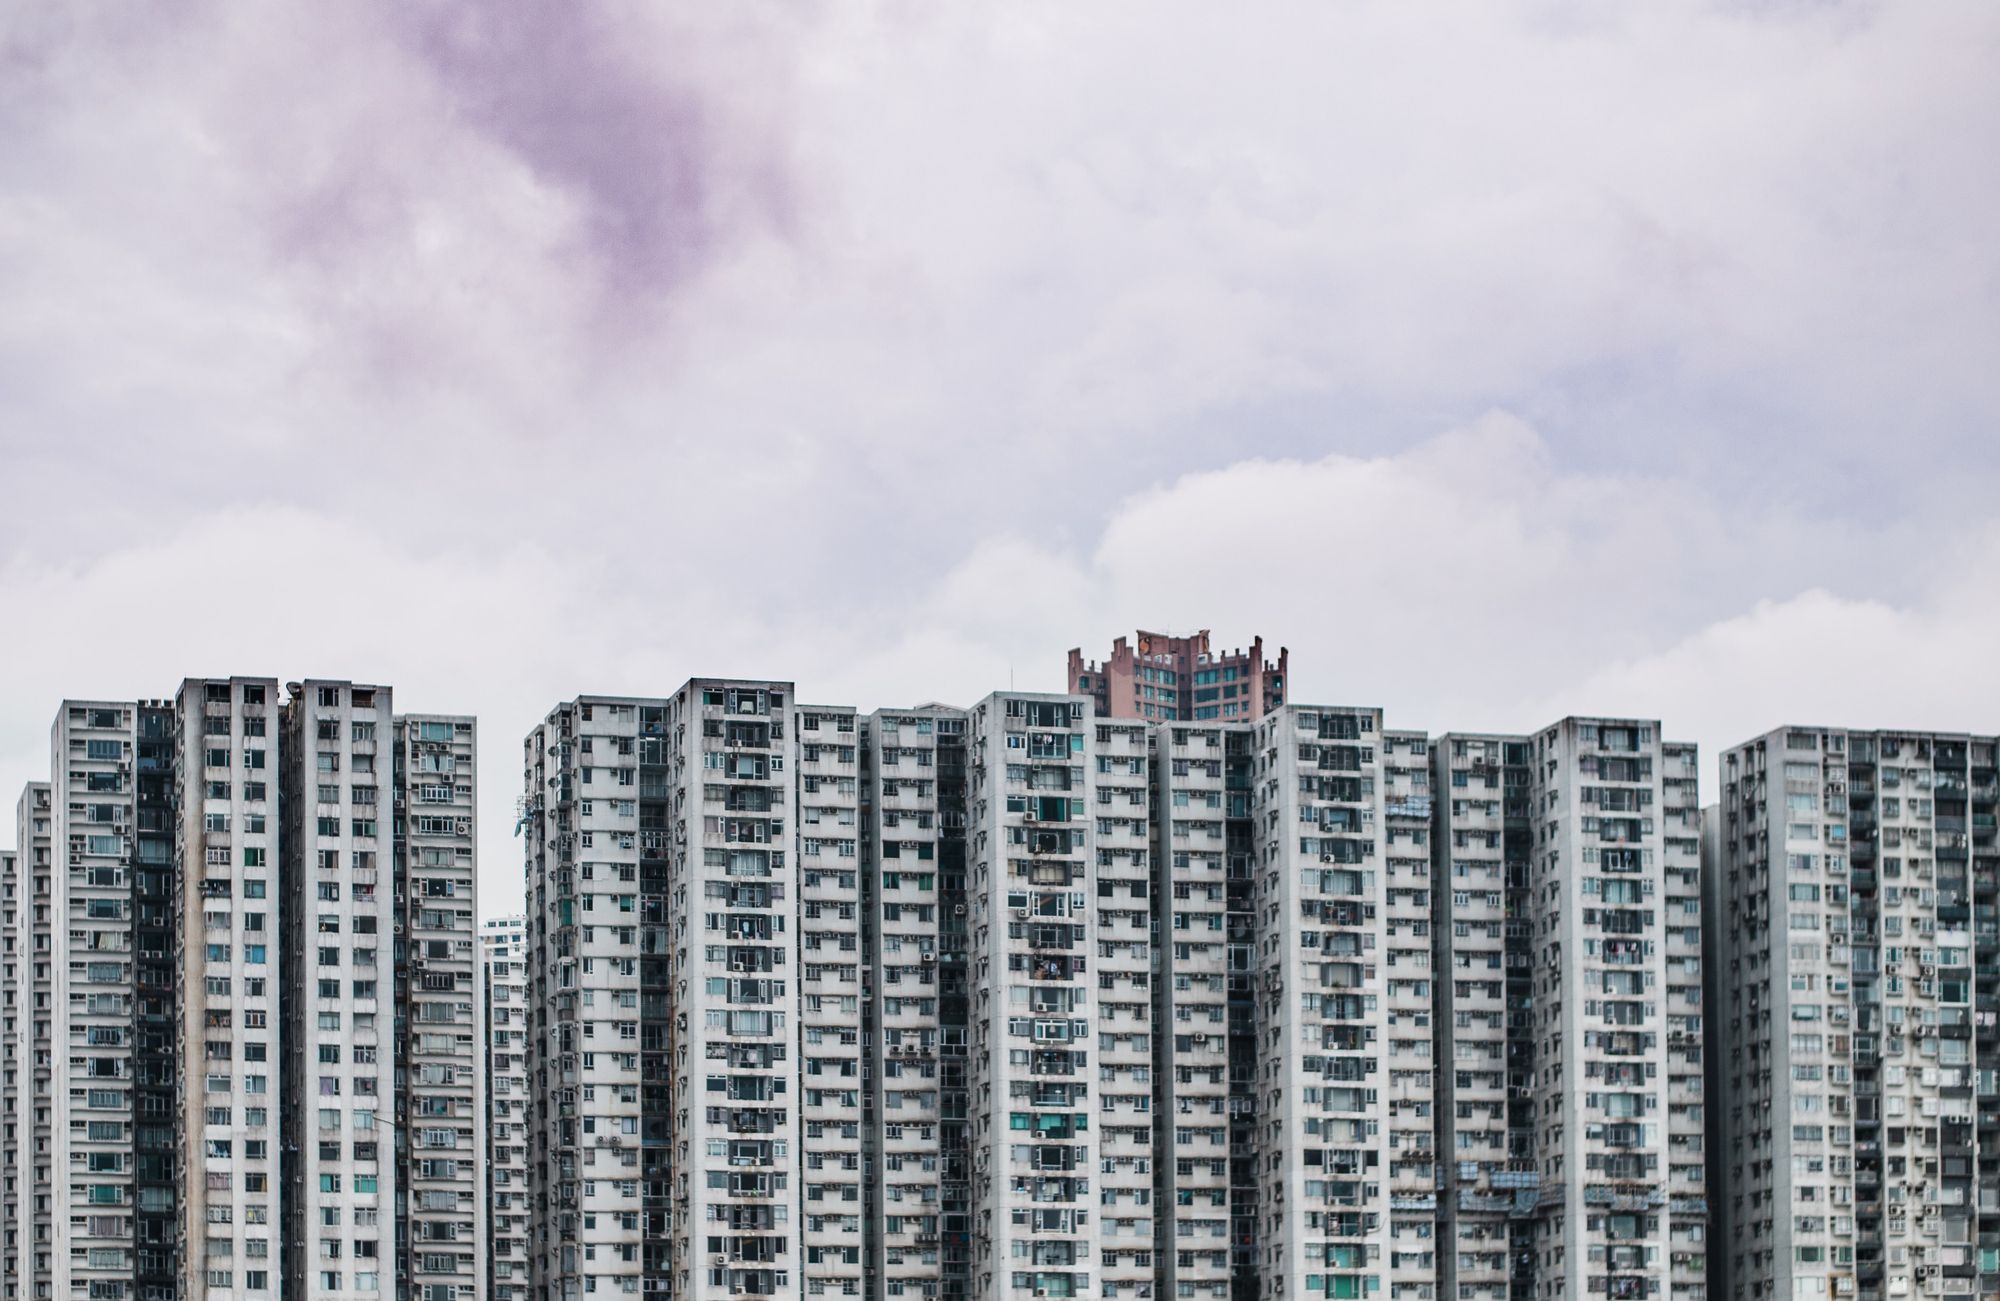 Set of identical apartment buildings in Hong Kong